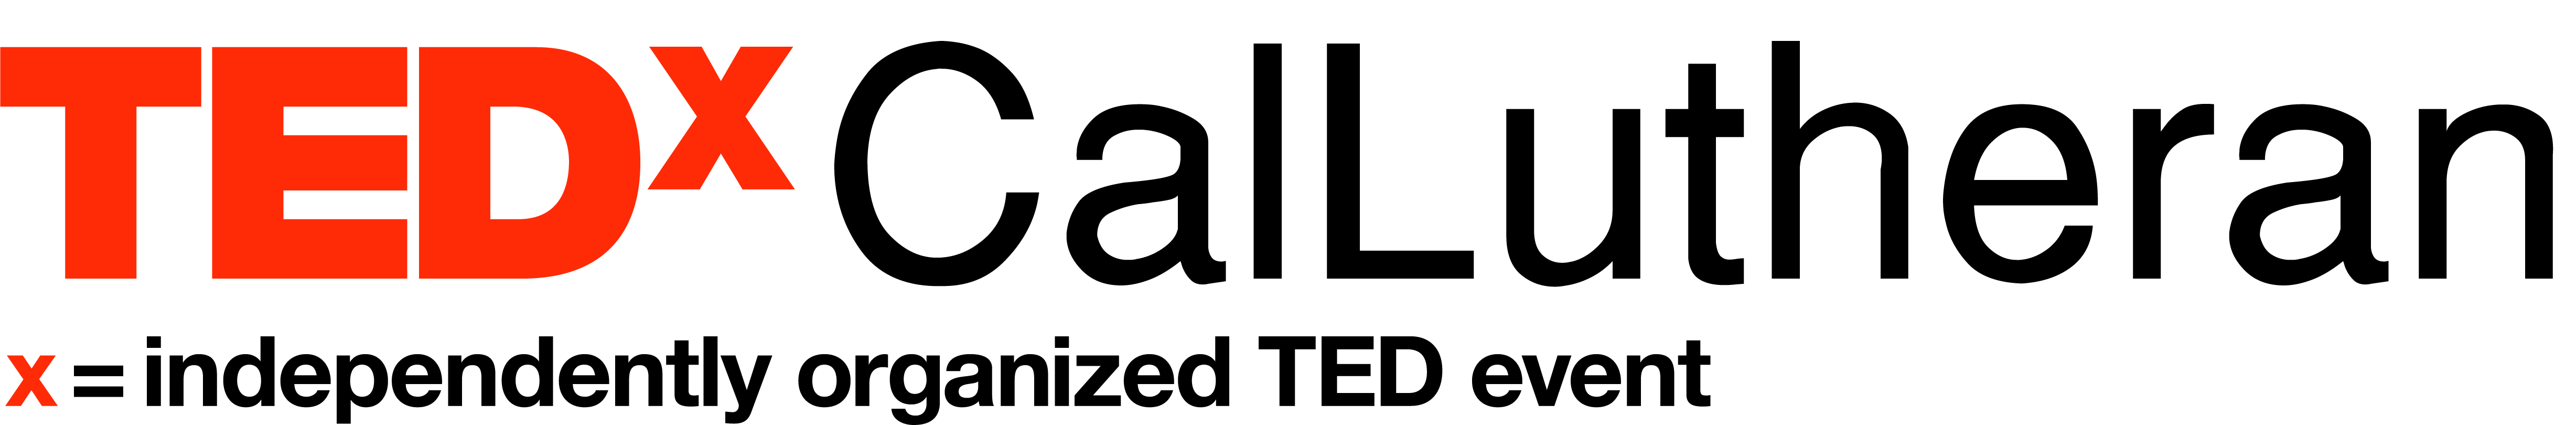 TEDx Logo - TEDx Cal Lutheran | Cal Lutheran